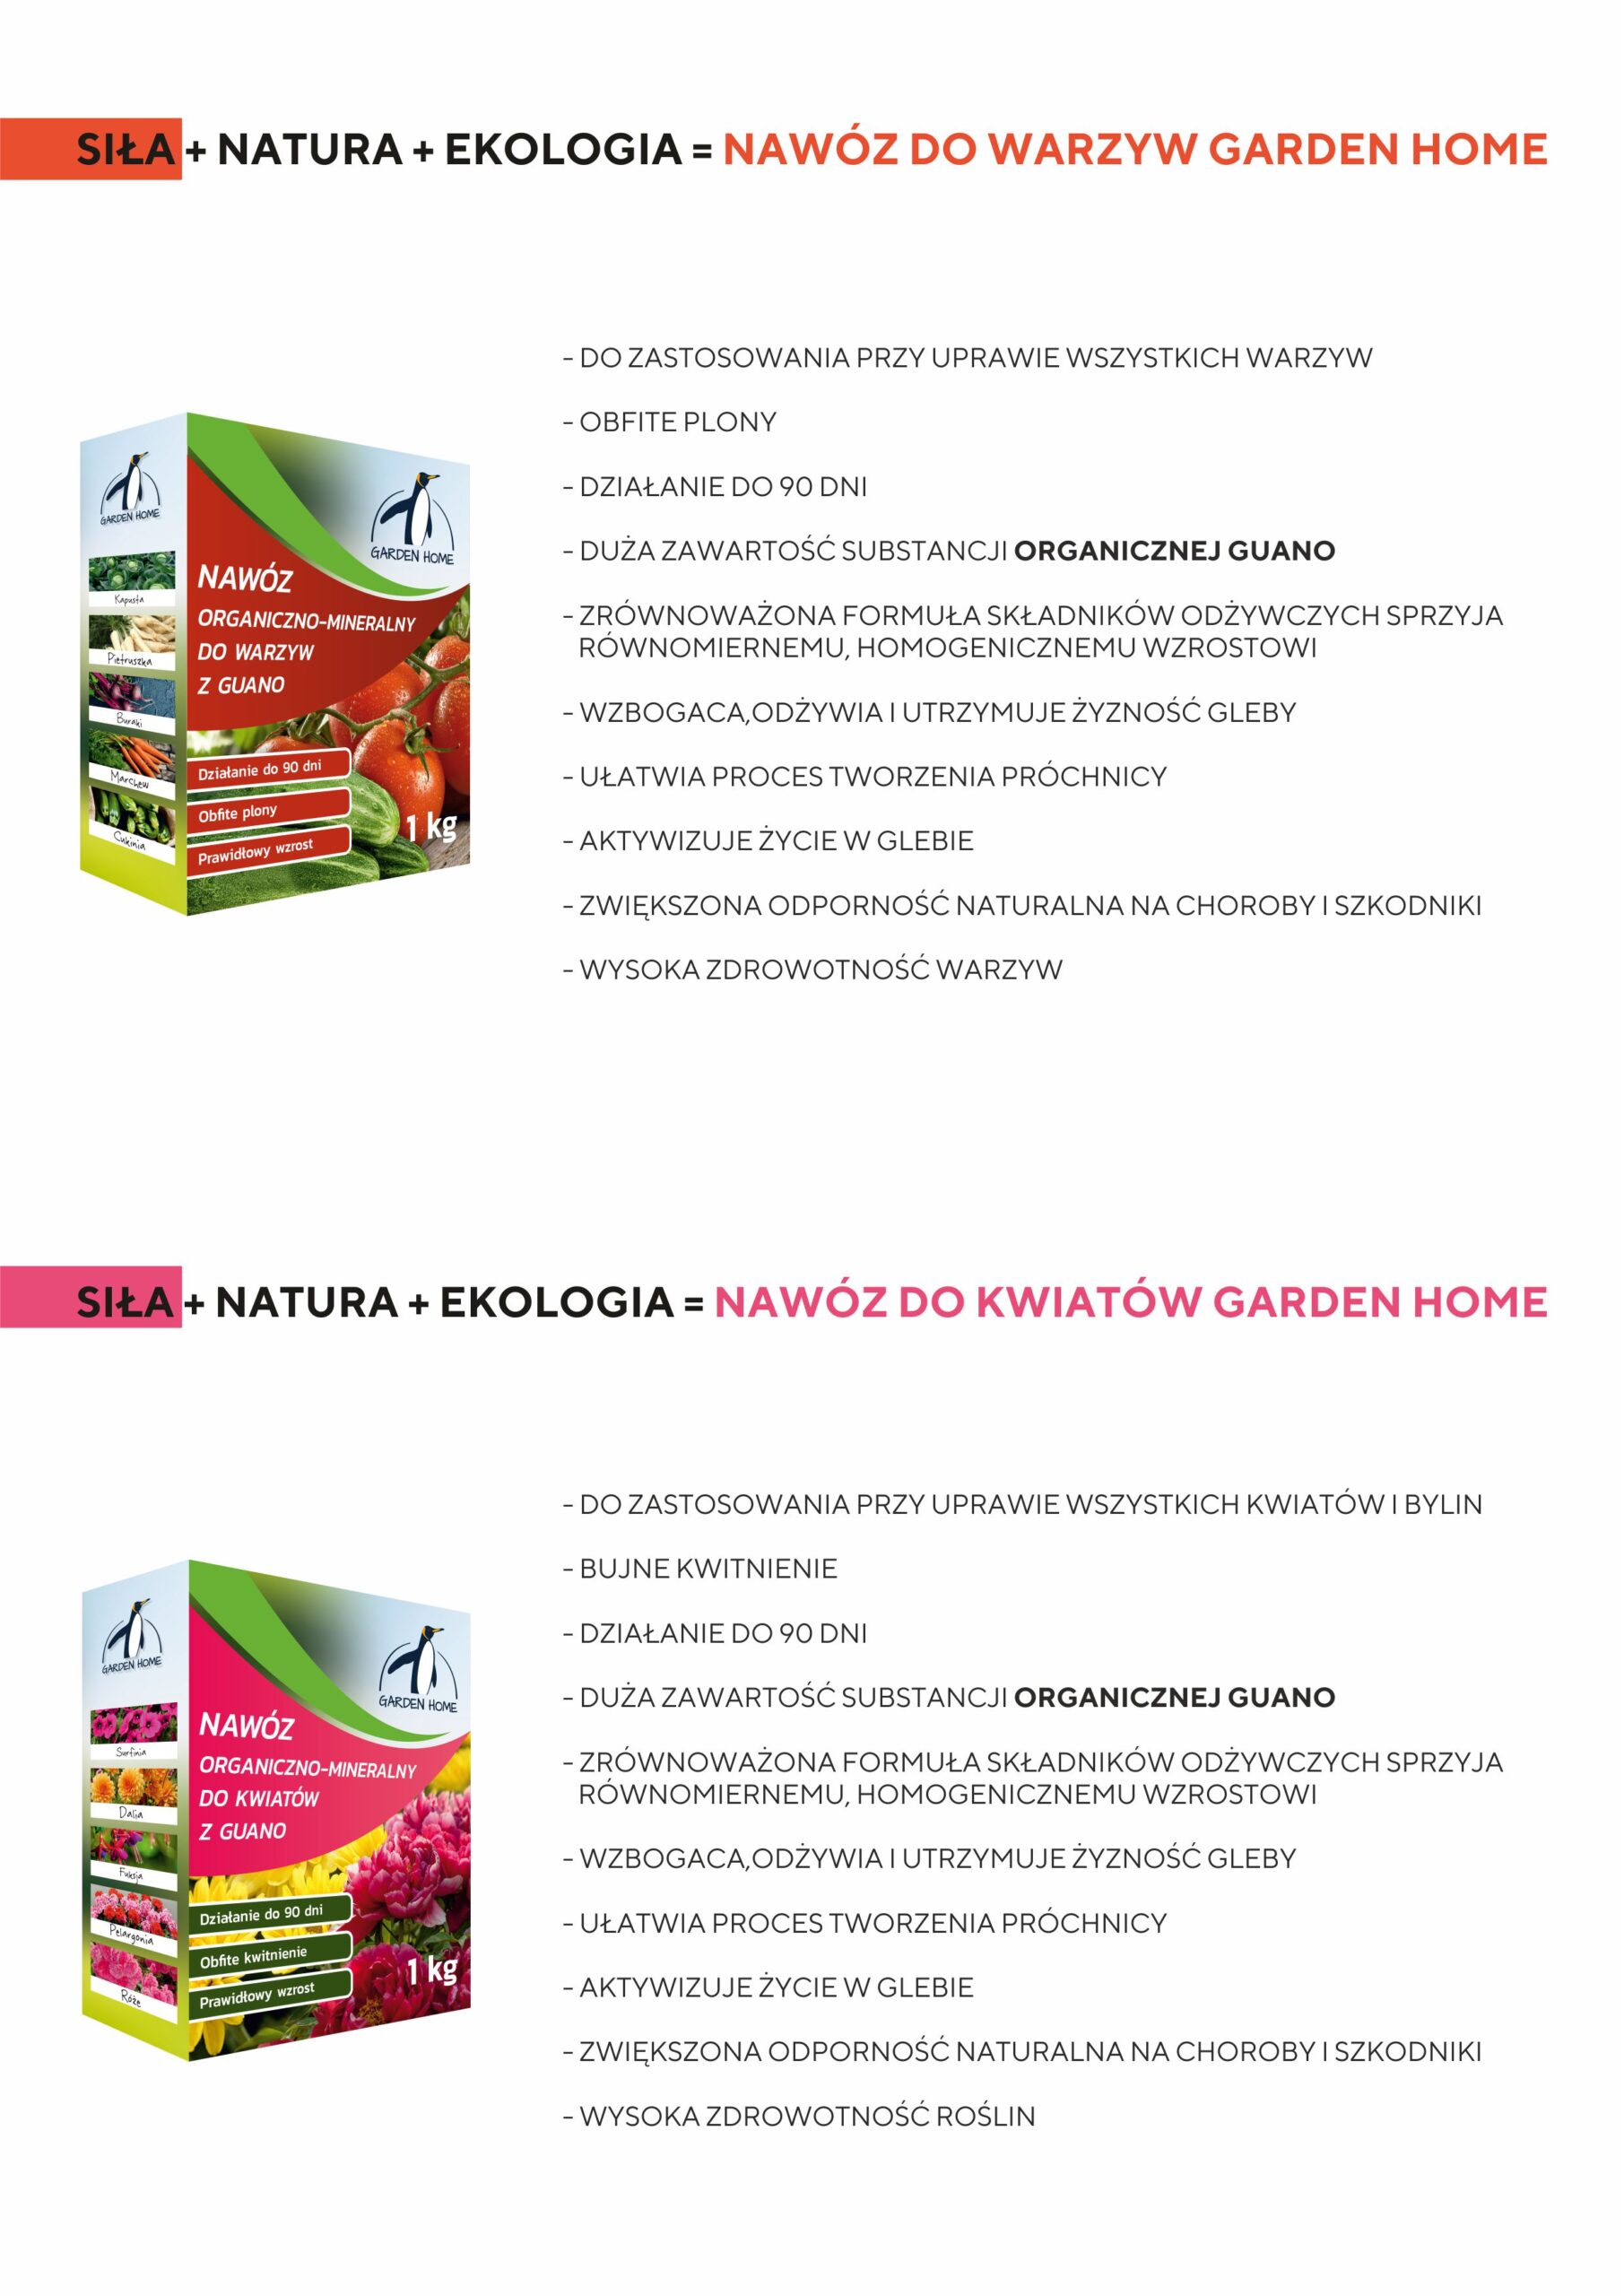 Katalog nawozów guano